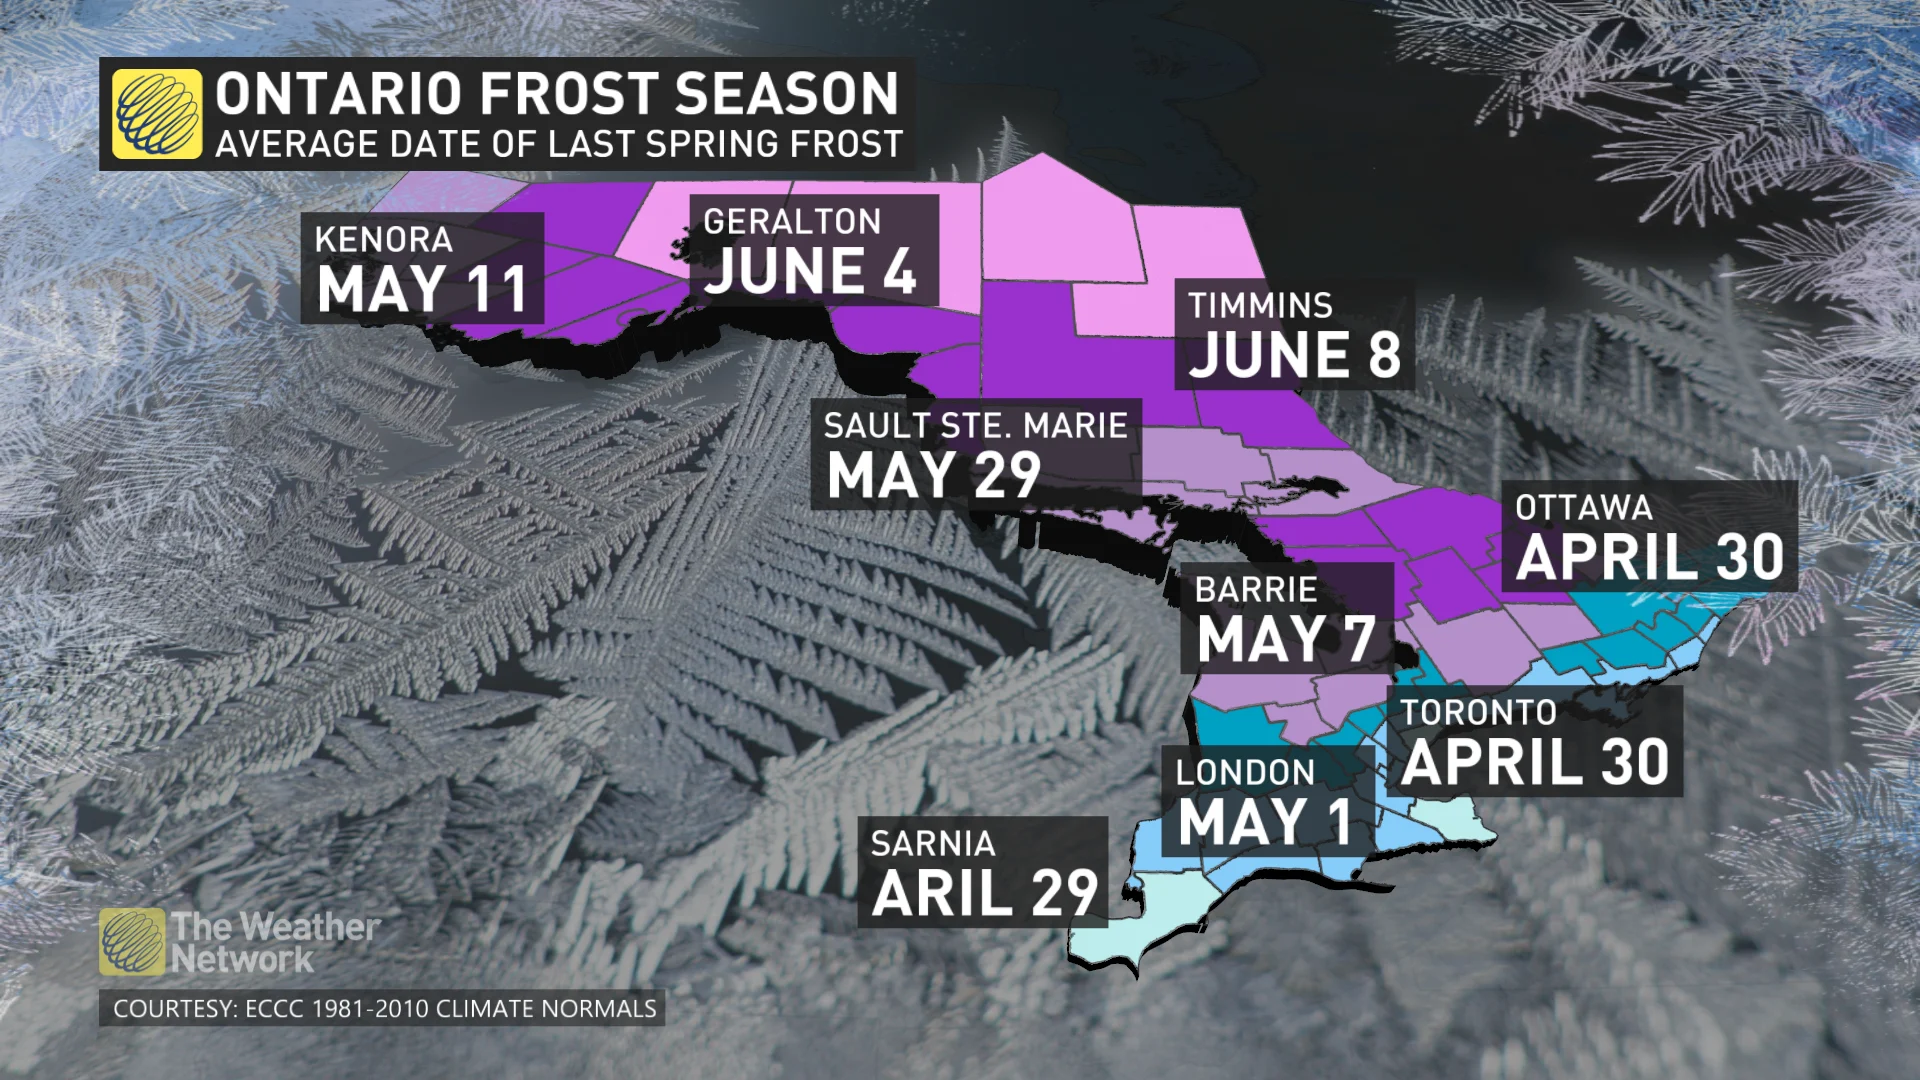 Baron - Ontario frost season - average date of last spring frost.jpg